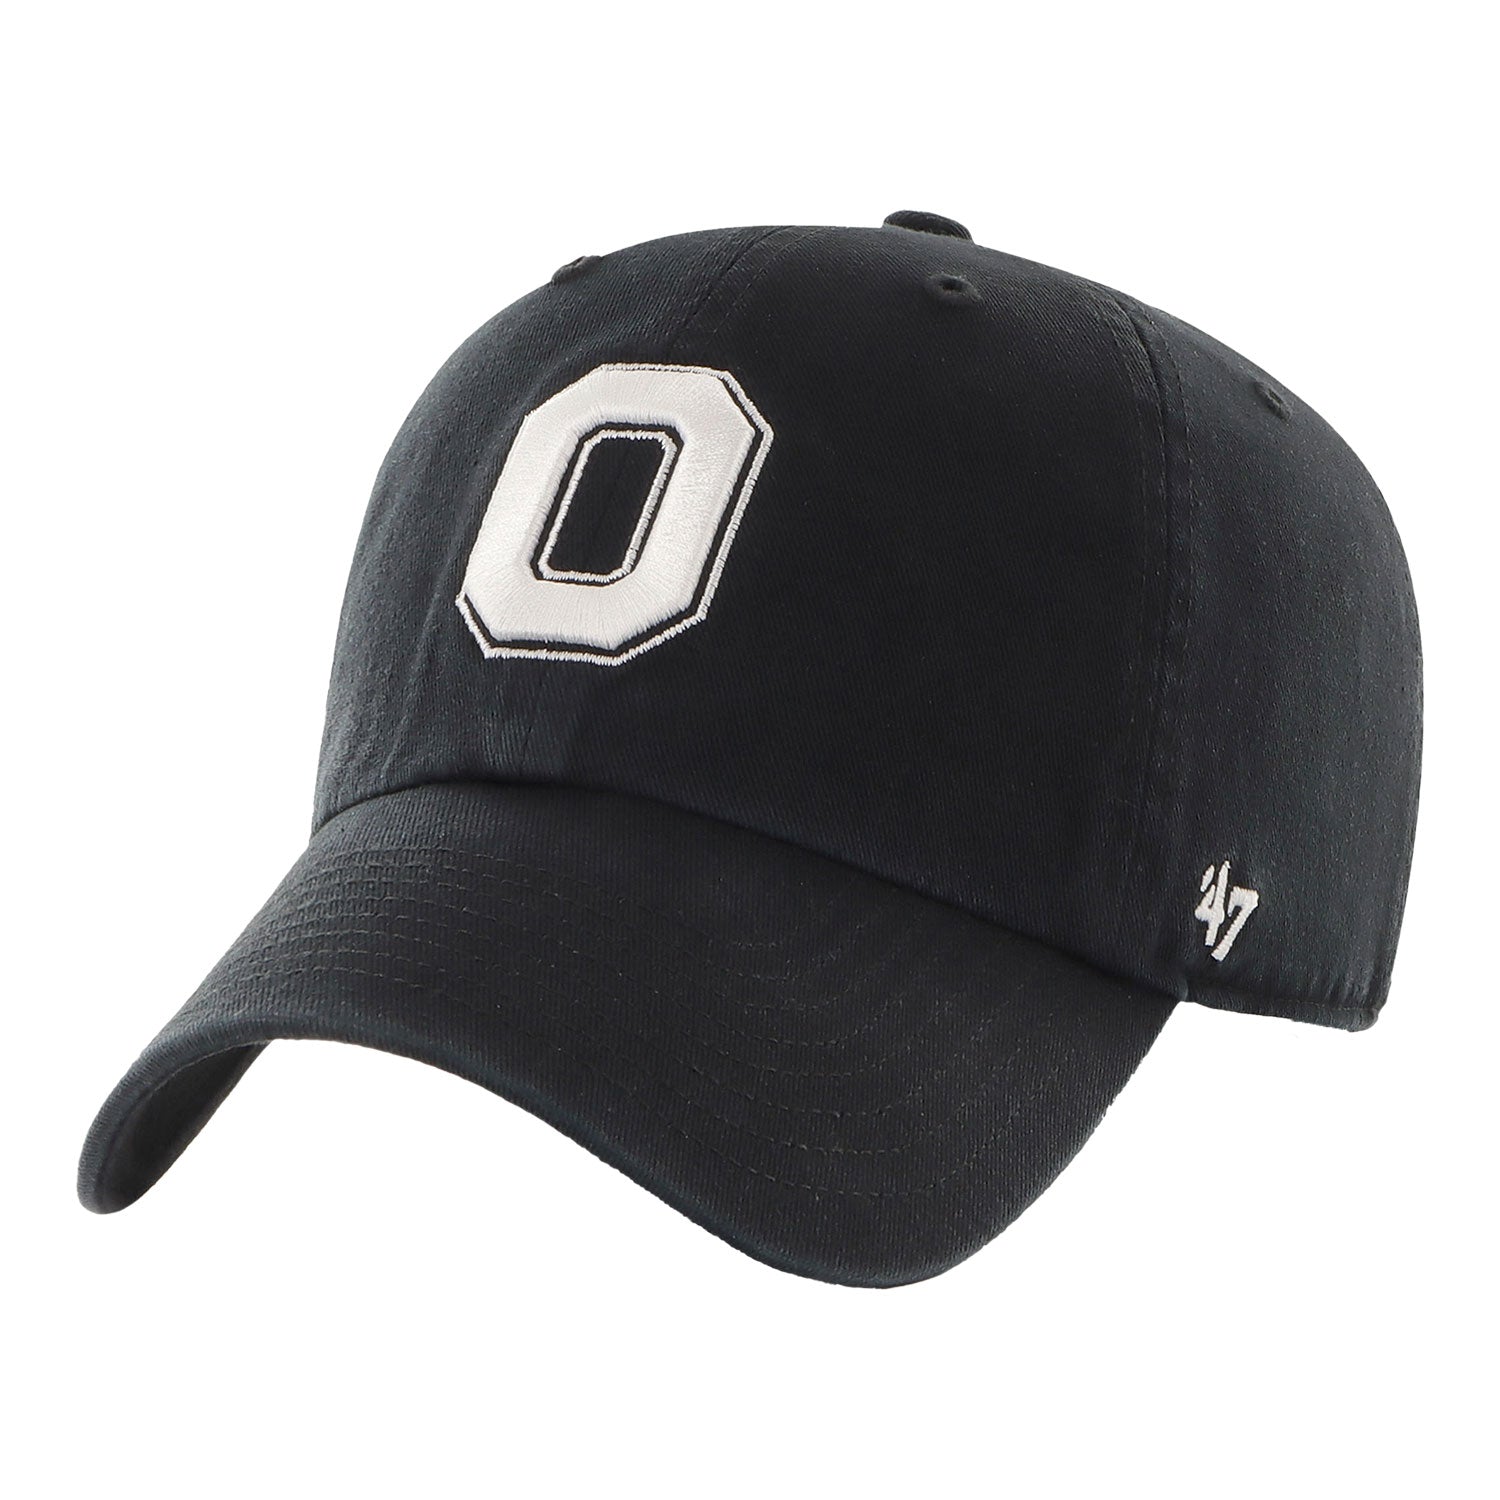 Ohio State Buckeyes Block O Clean Up Black Adjustable Hat